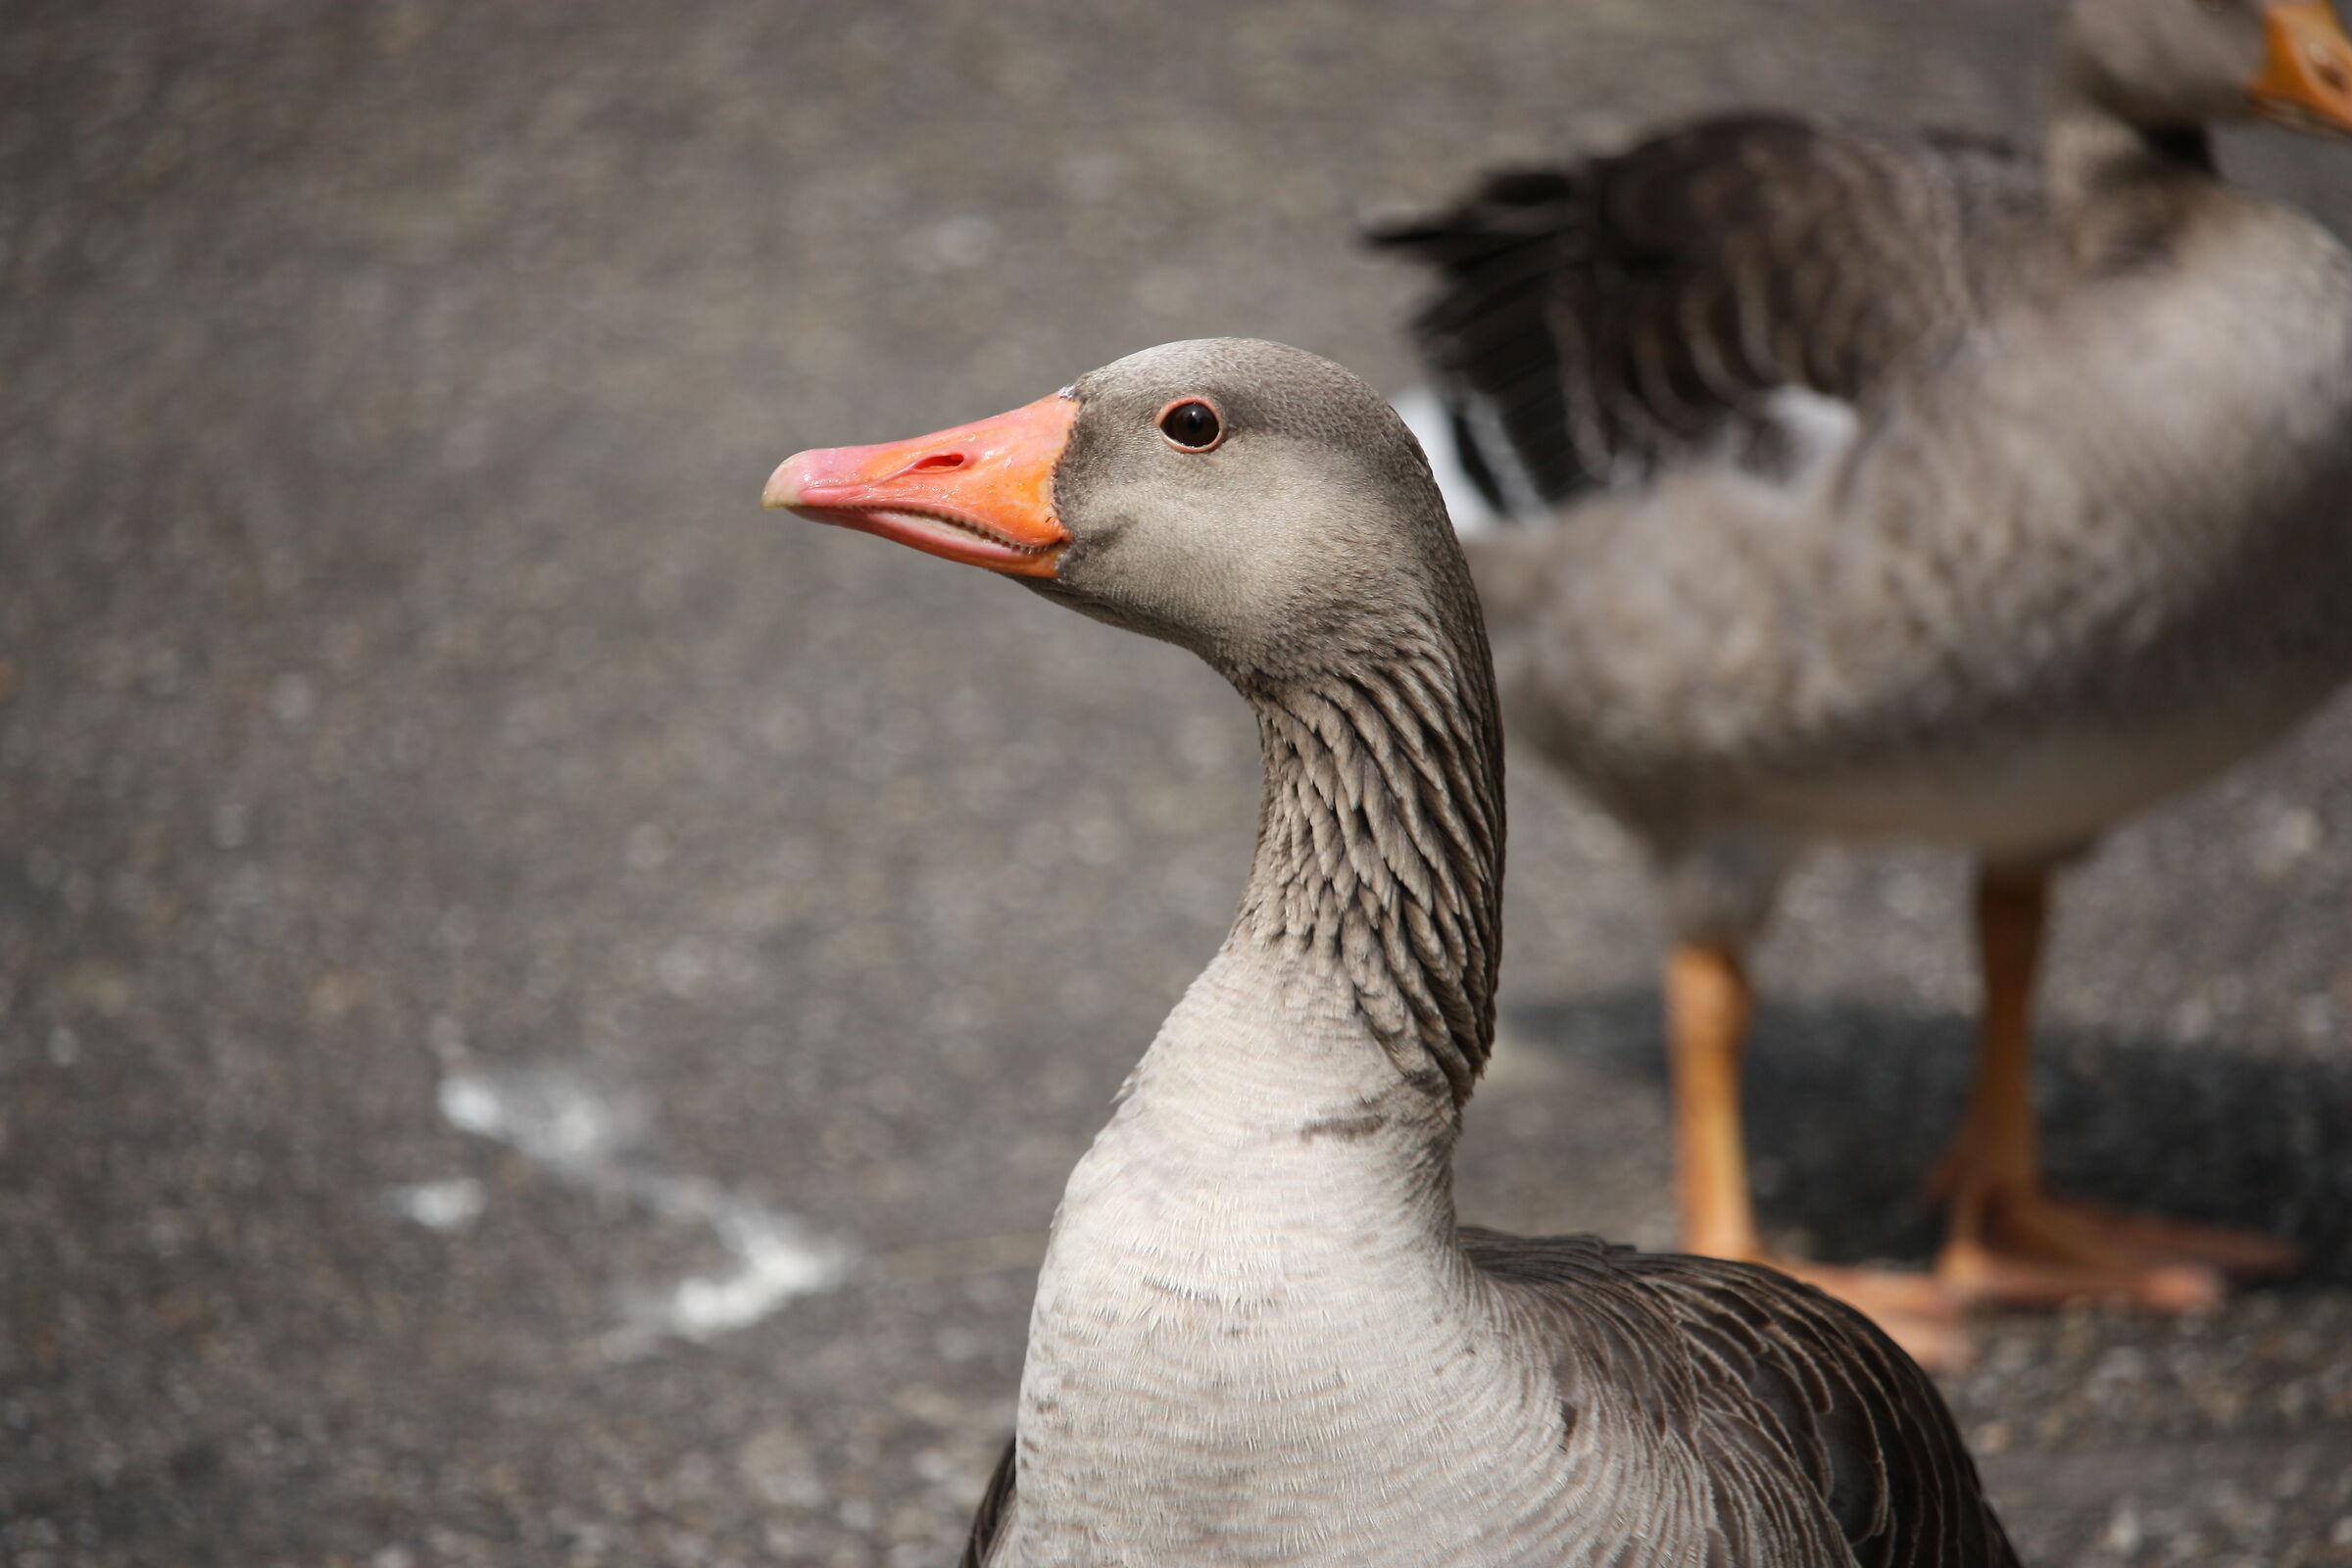 Greylag goose in Kronenburgerpark, Nijmegen...